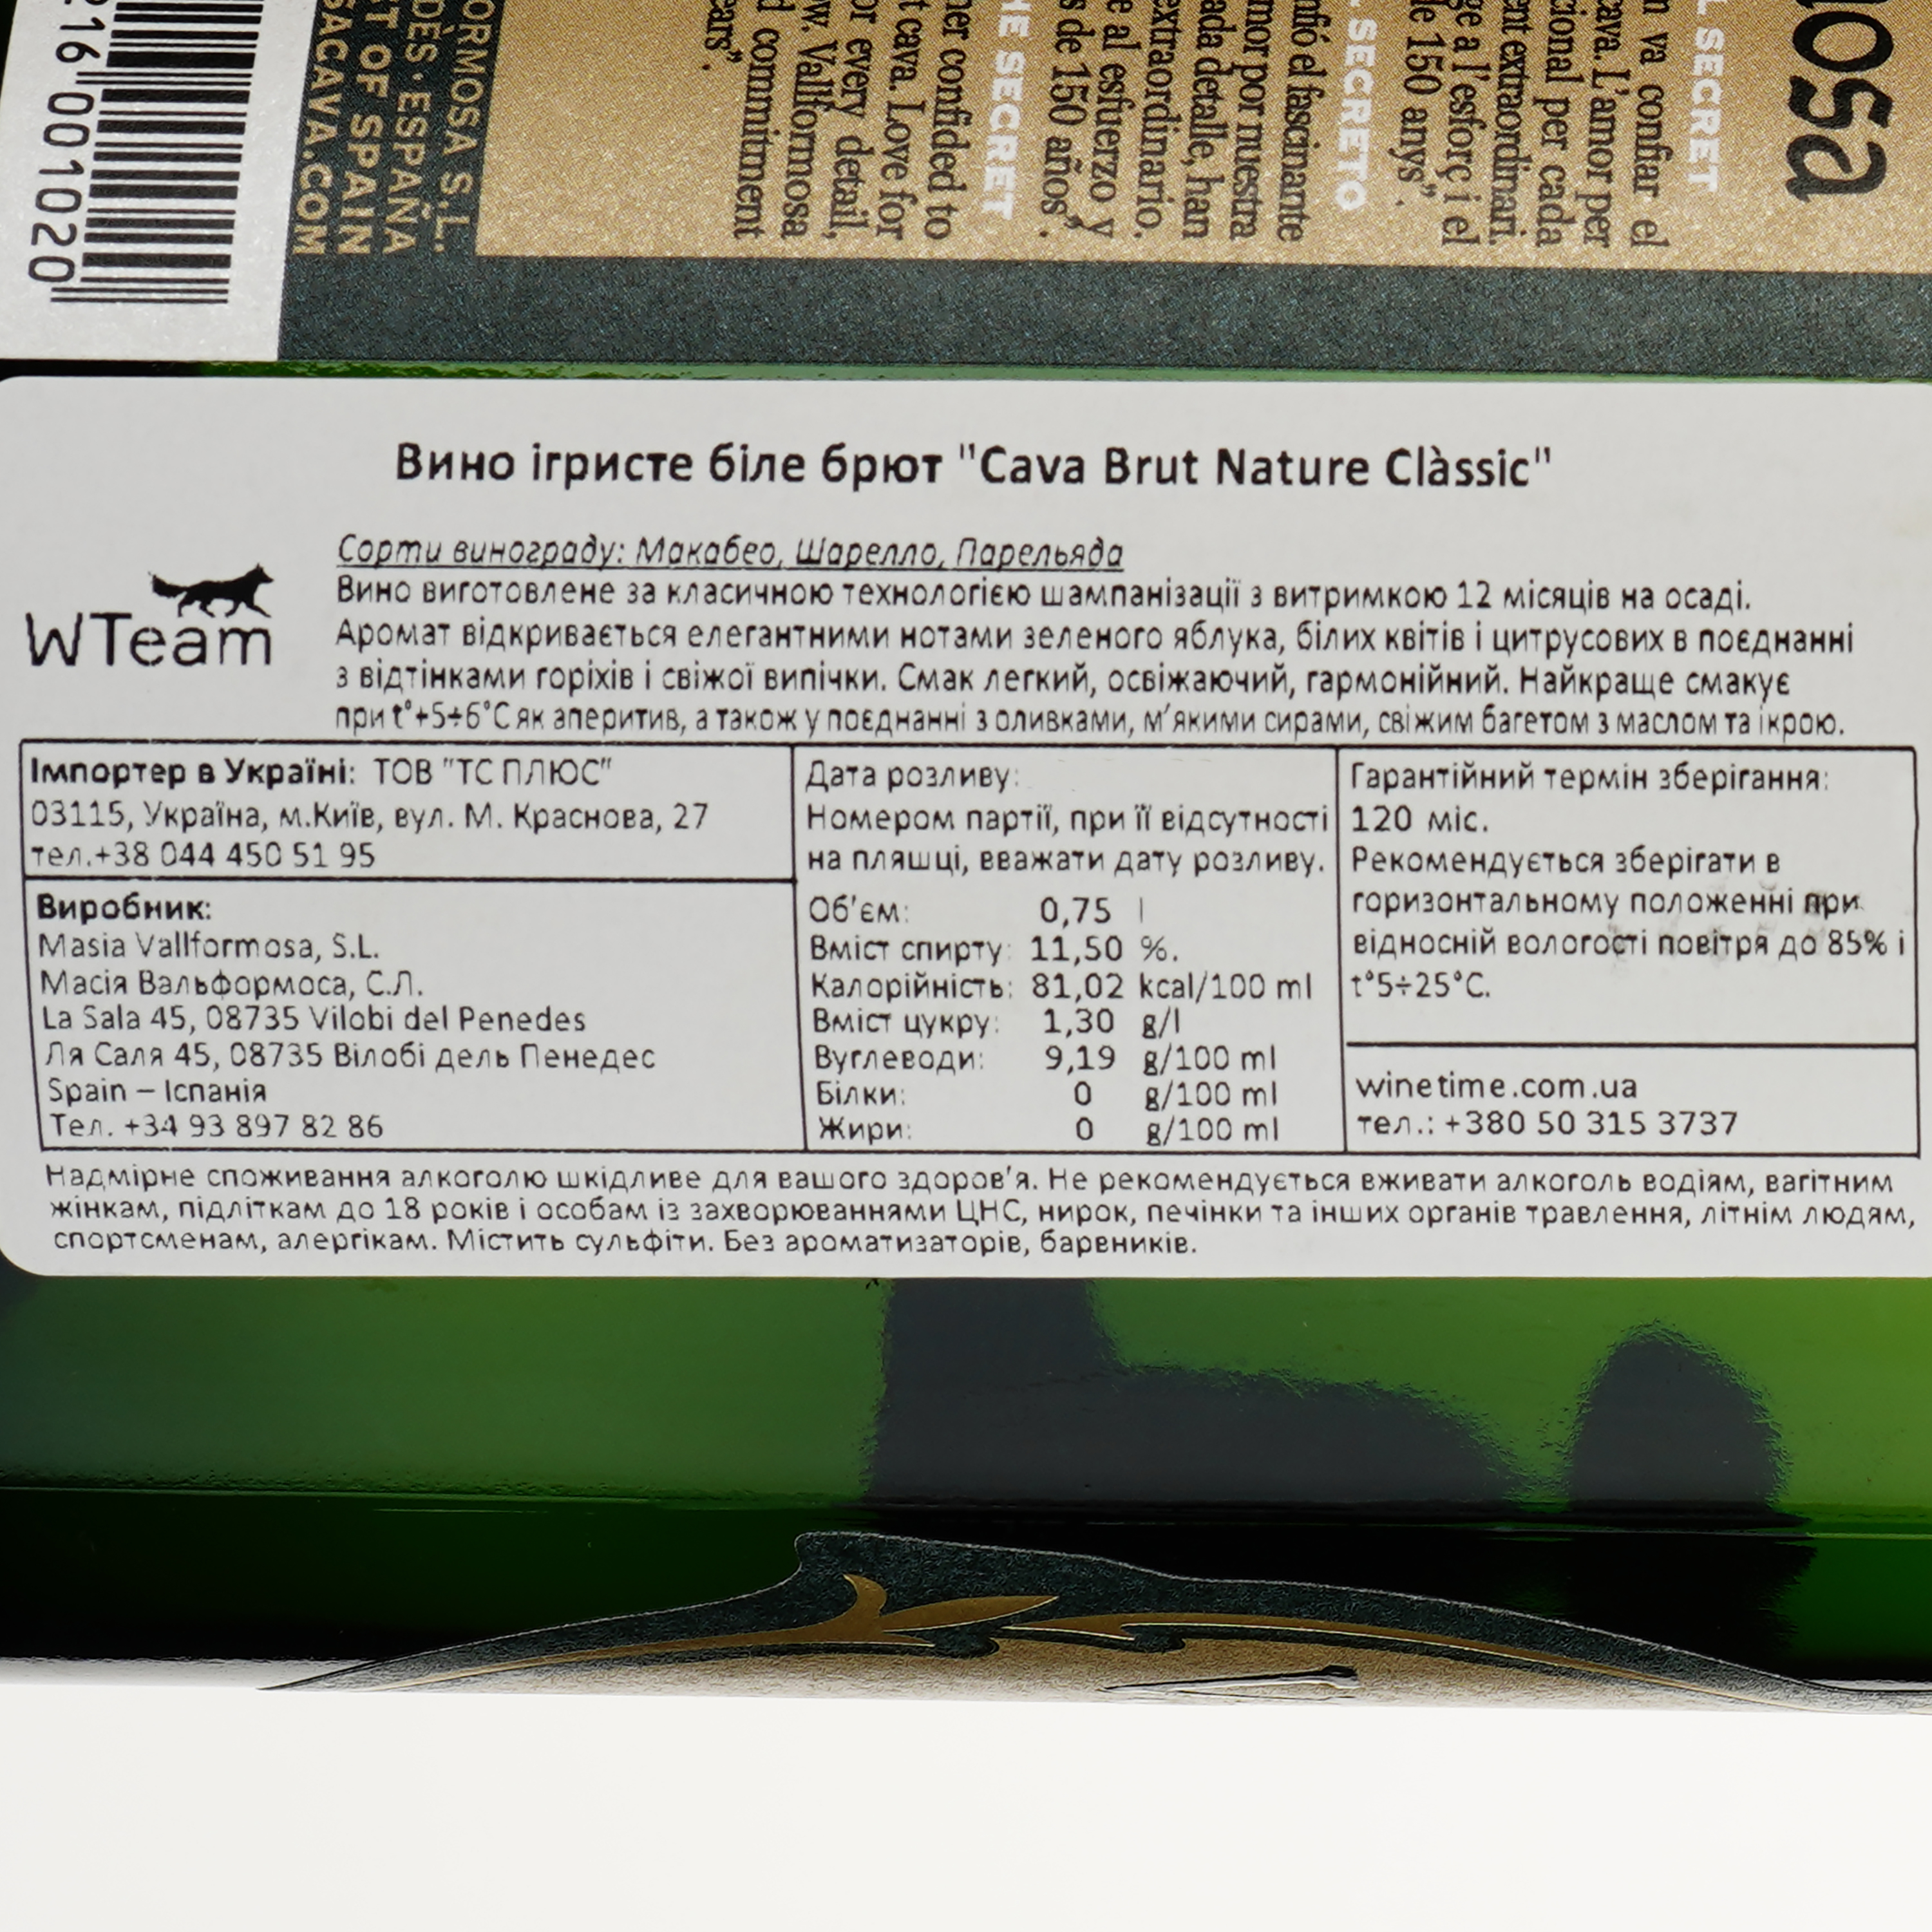 Игристое вино Masia Vallformosa Classic Brut Nature, белое, брют, 11,5%, 0,75 л - фото 3